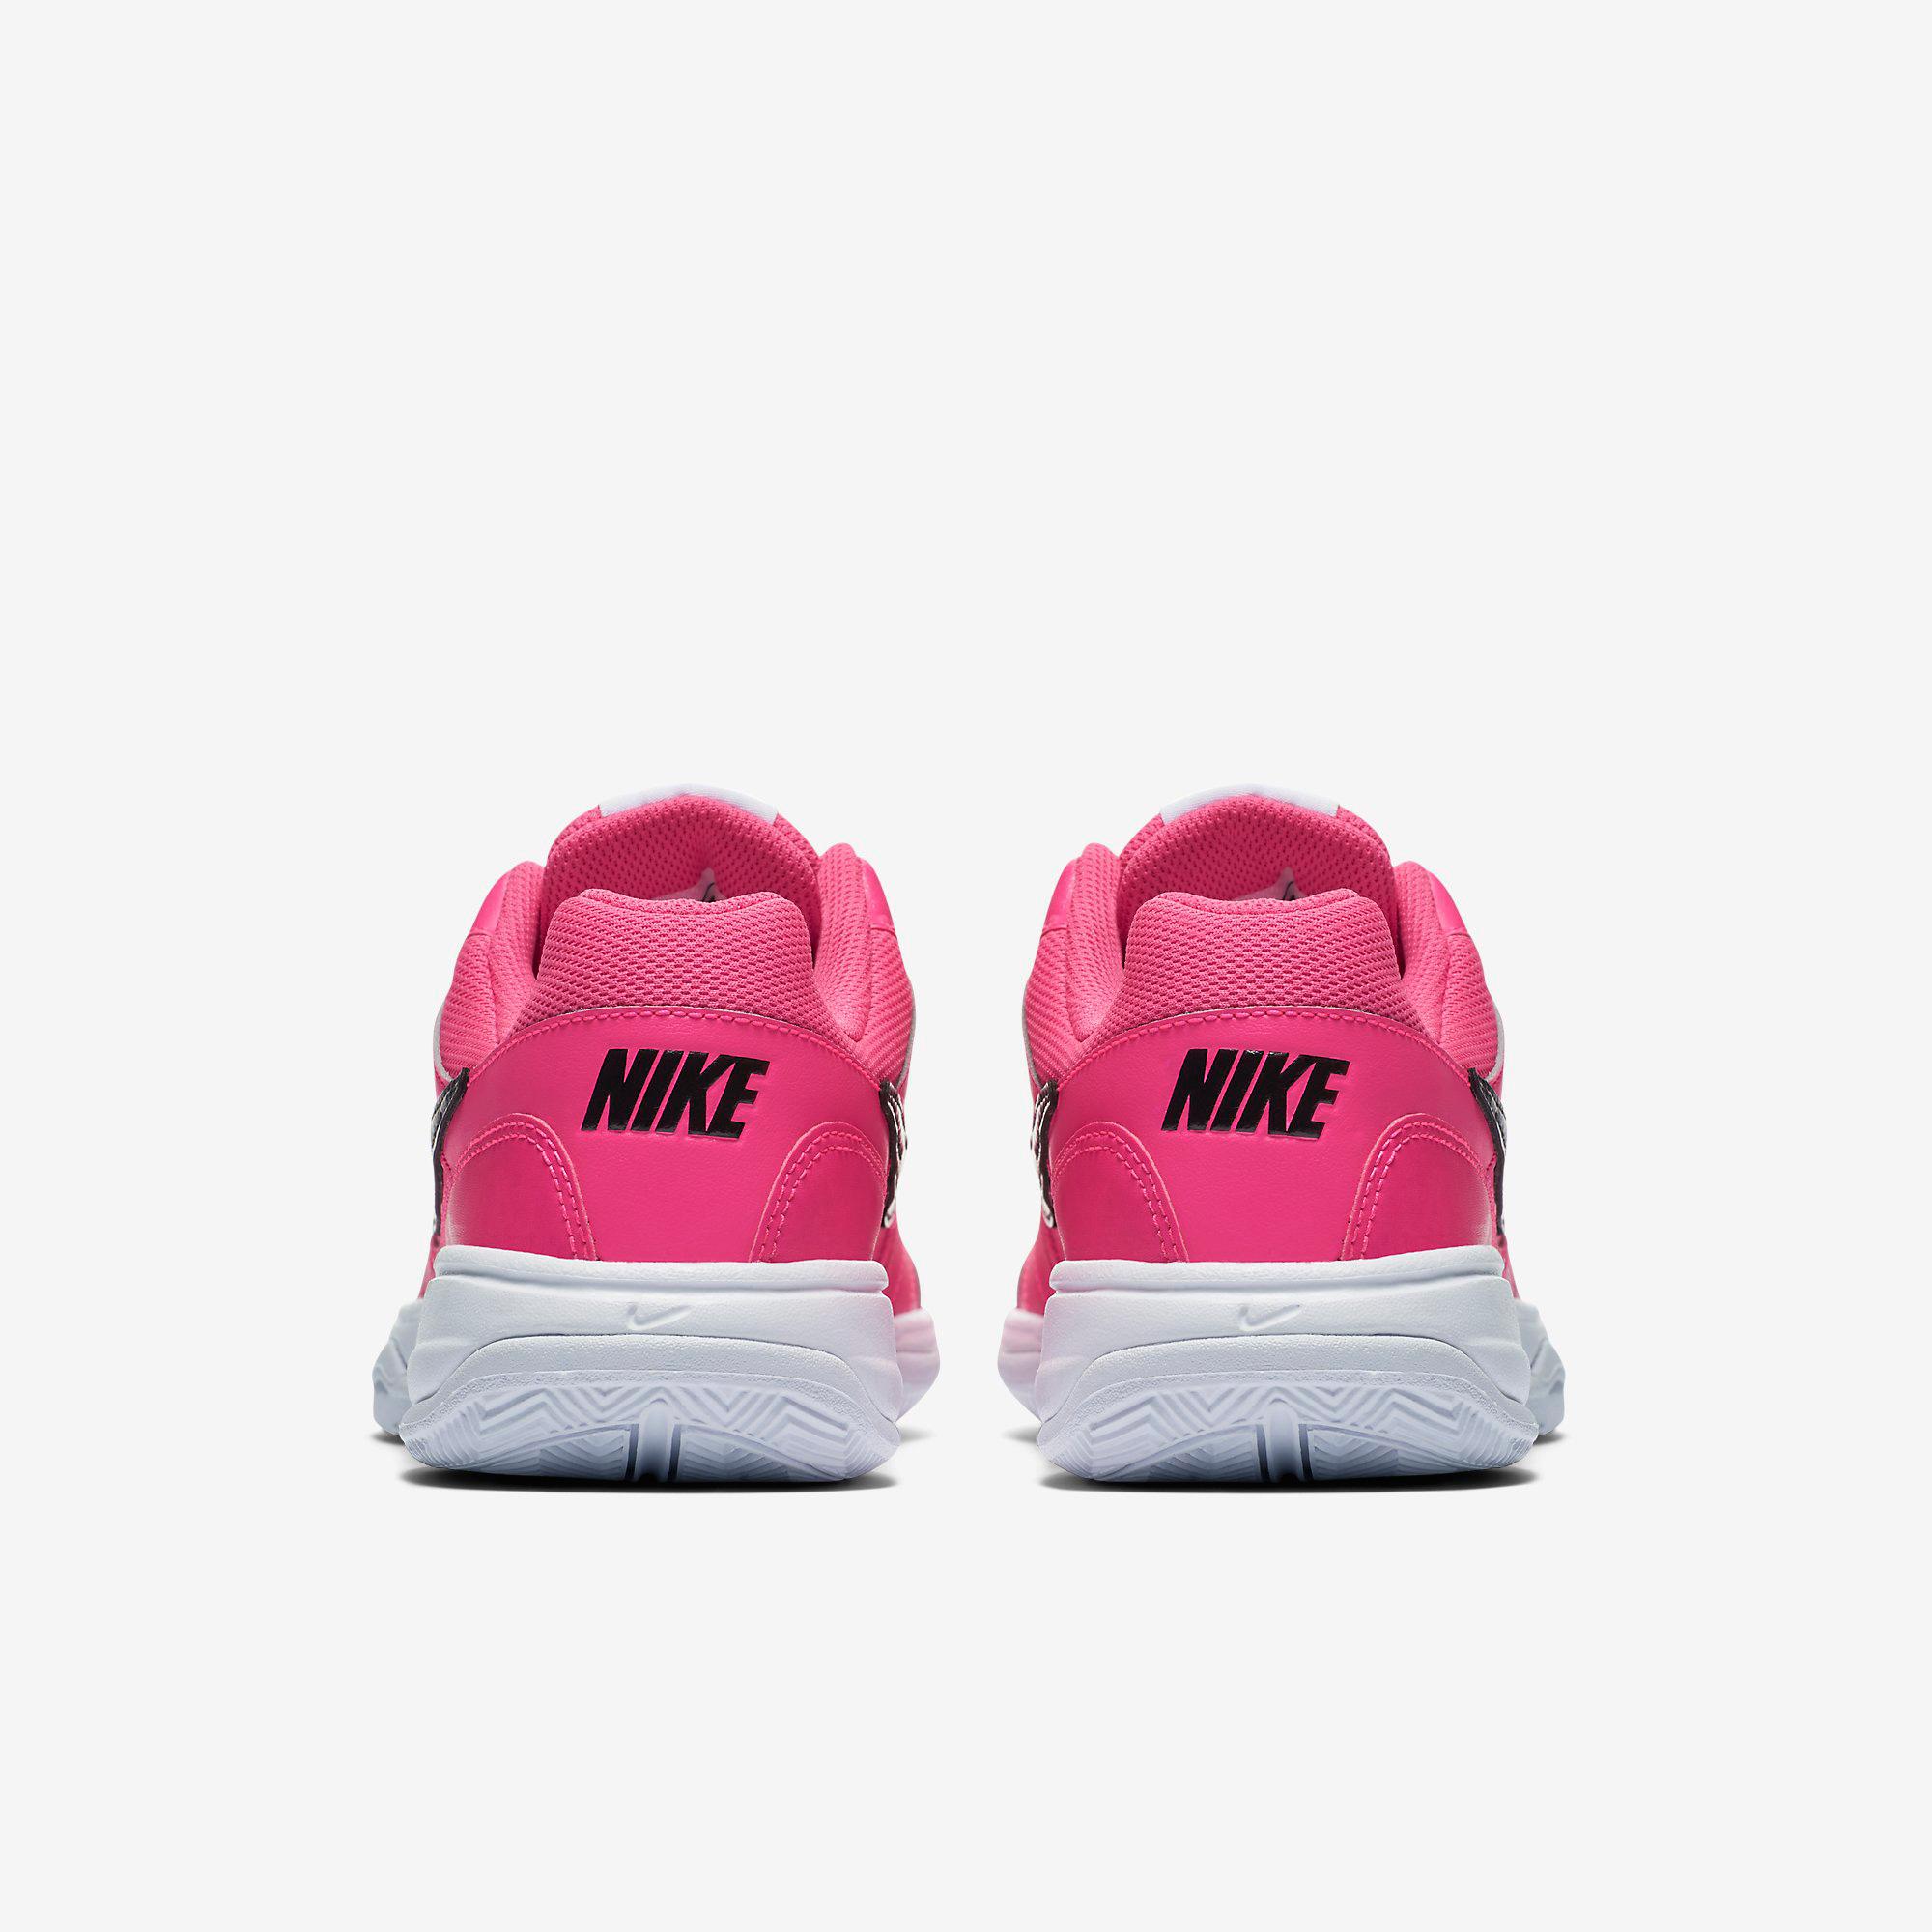 Nike Womens Court Lite Tennis Shoes - Pink Blast/Black - Tennisnuts.com